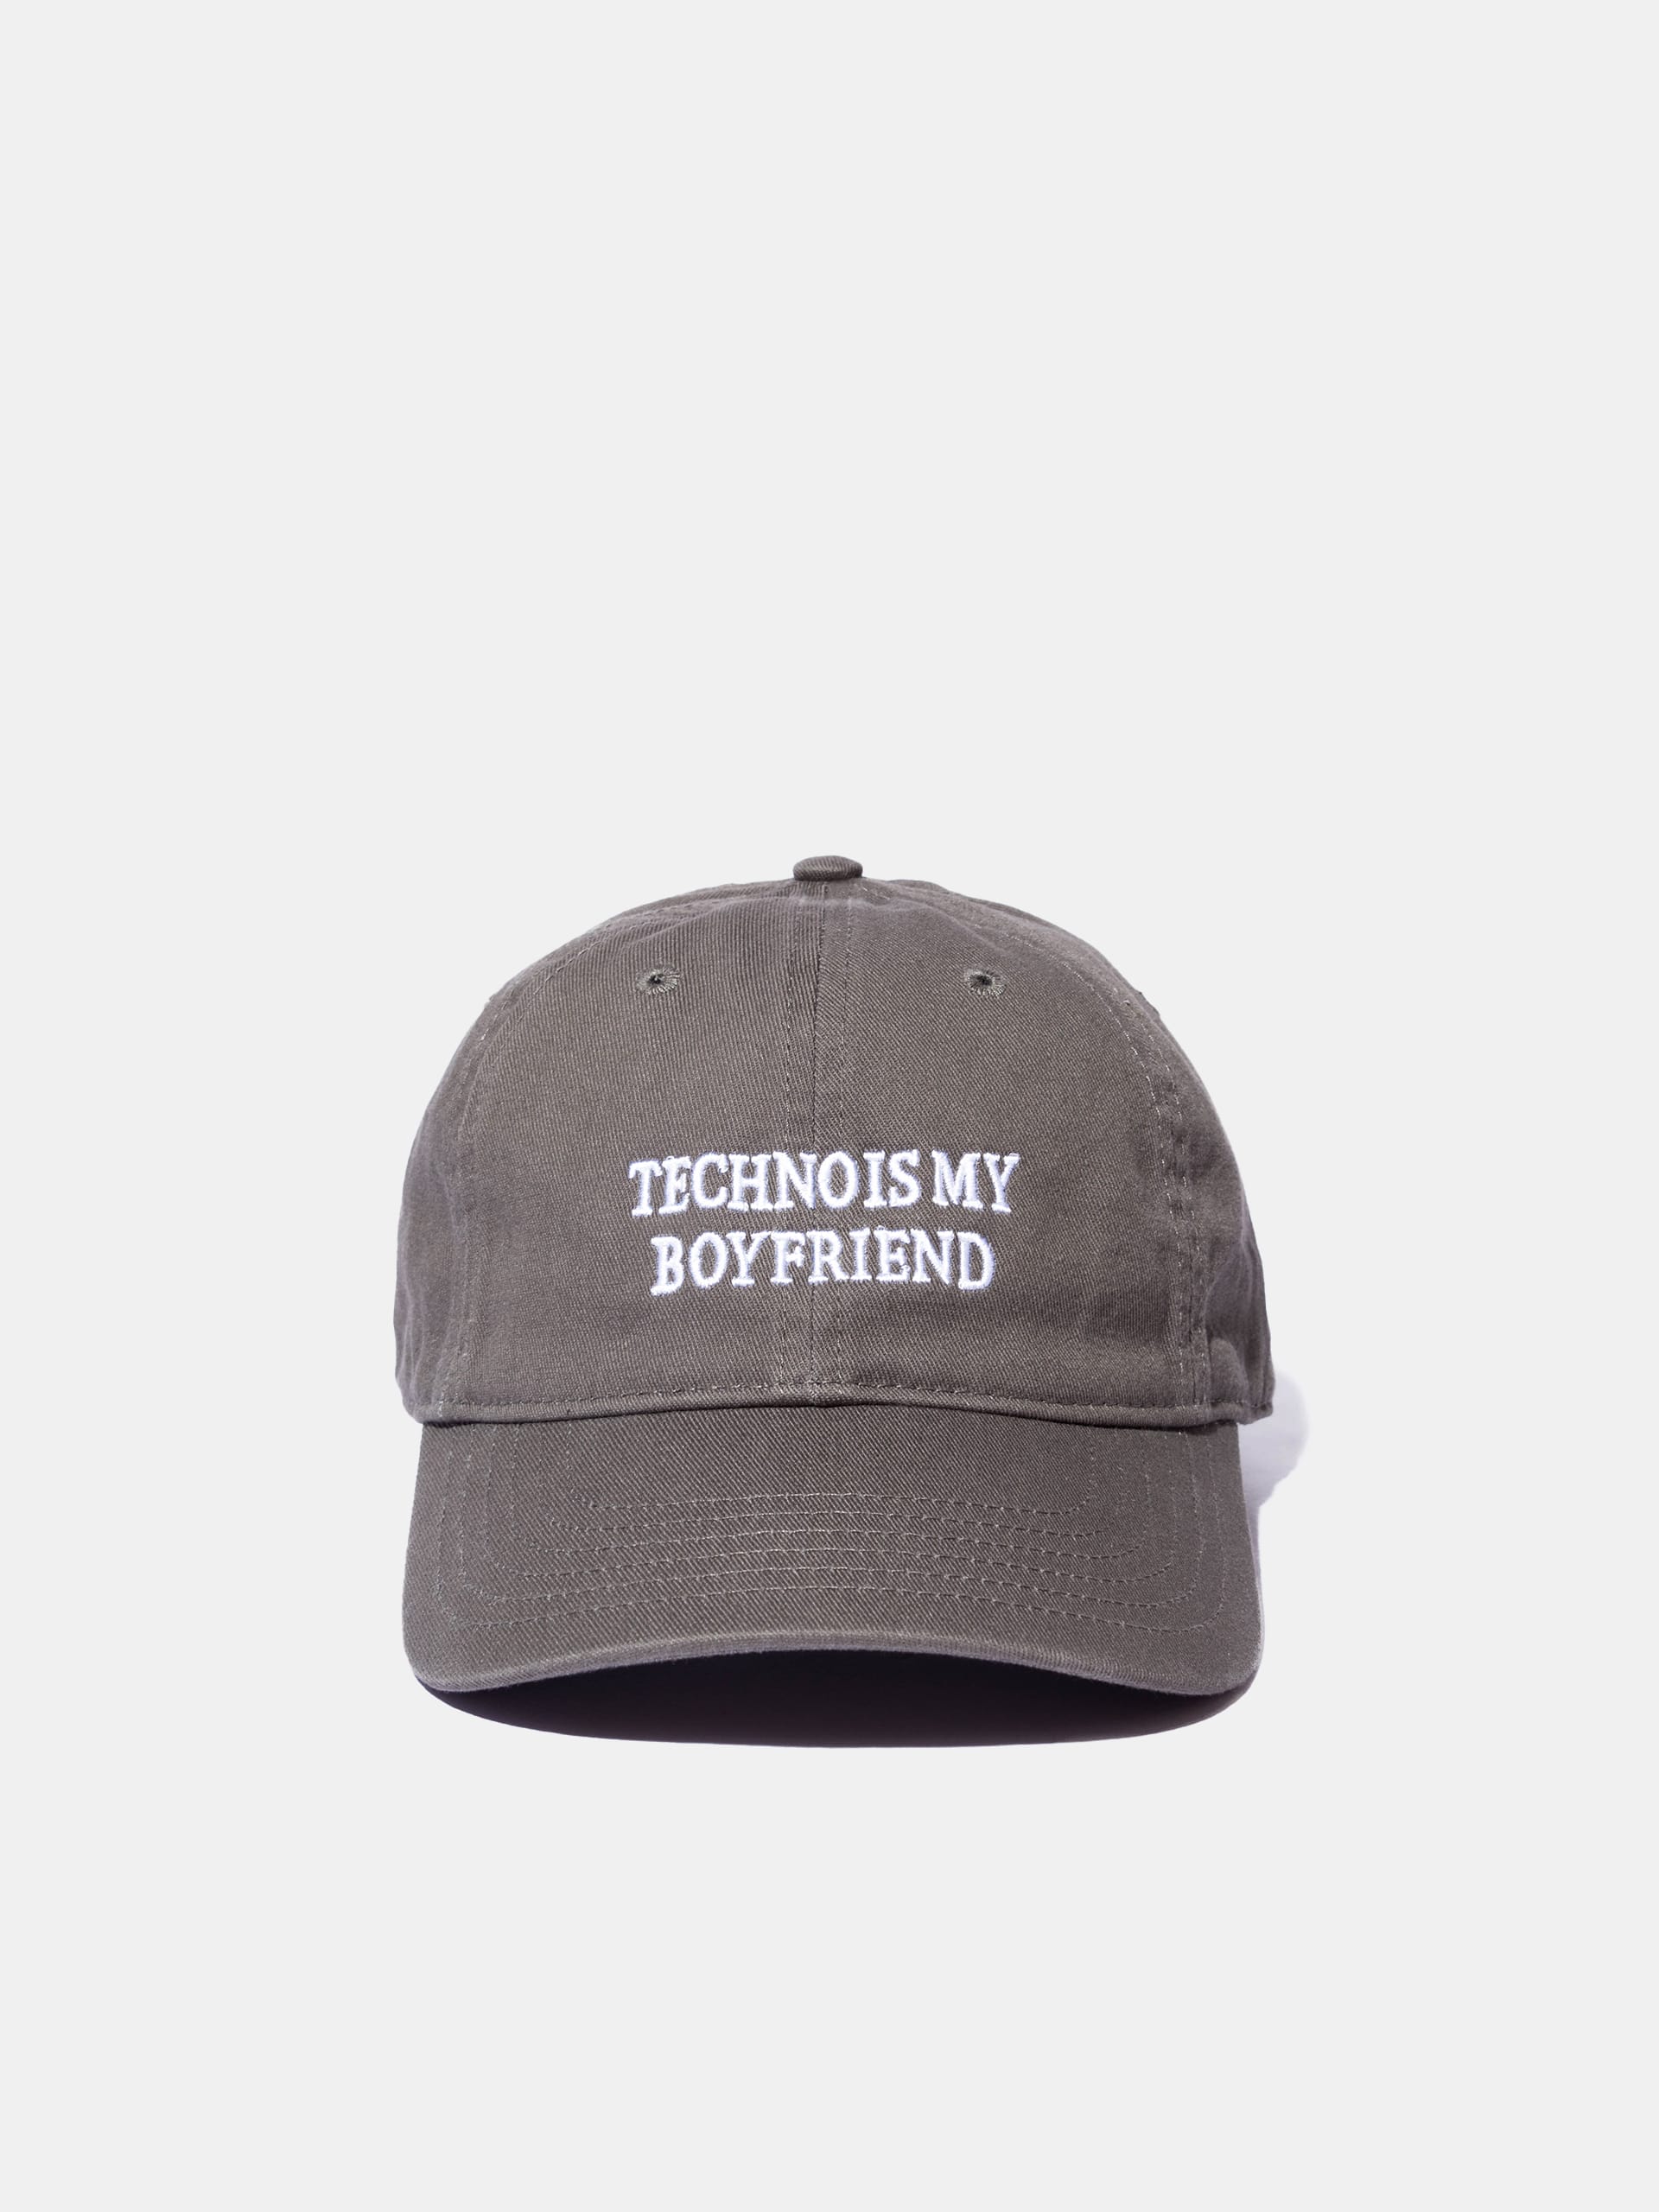 IDEA BOOKS】TECHNO IS MY BOYFRIEND HATキャップ - キャップ